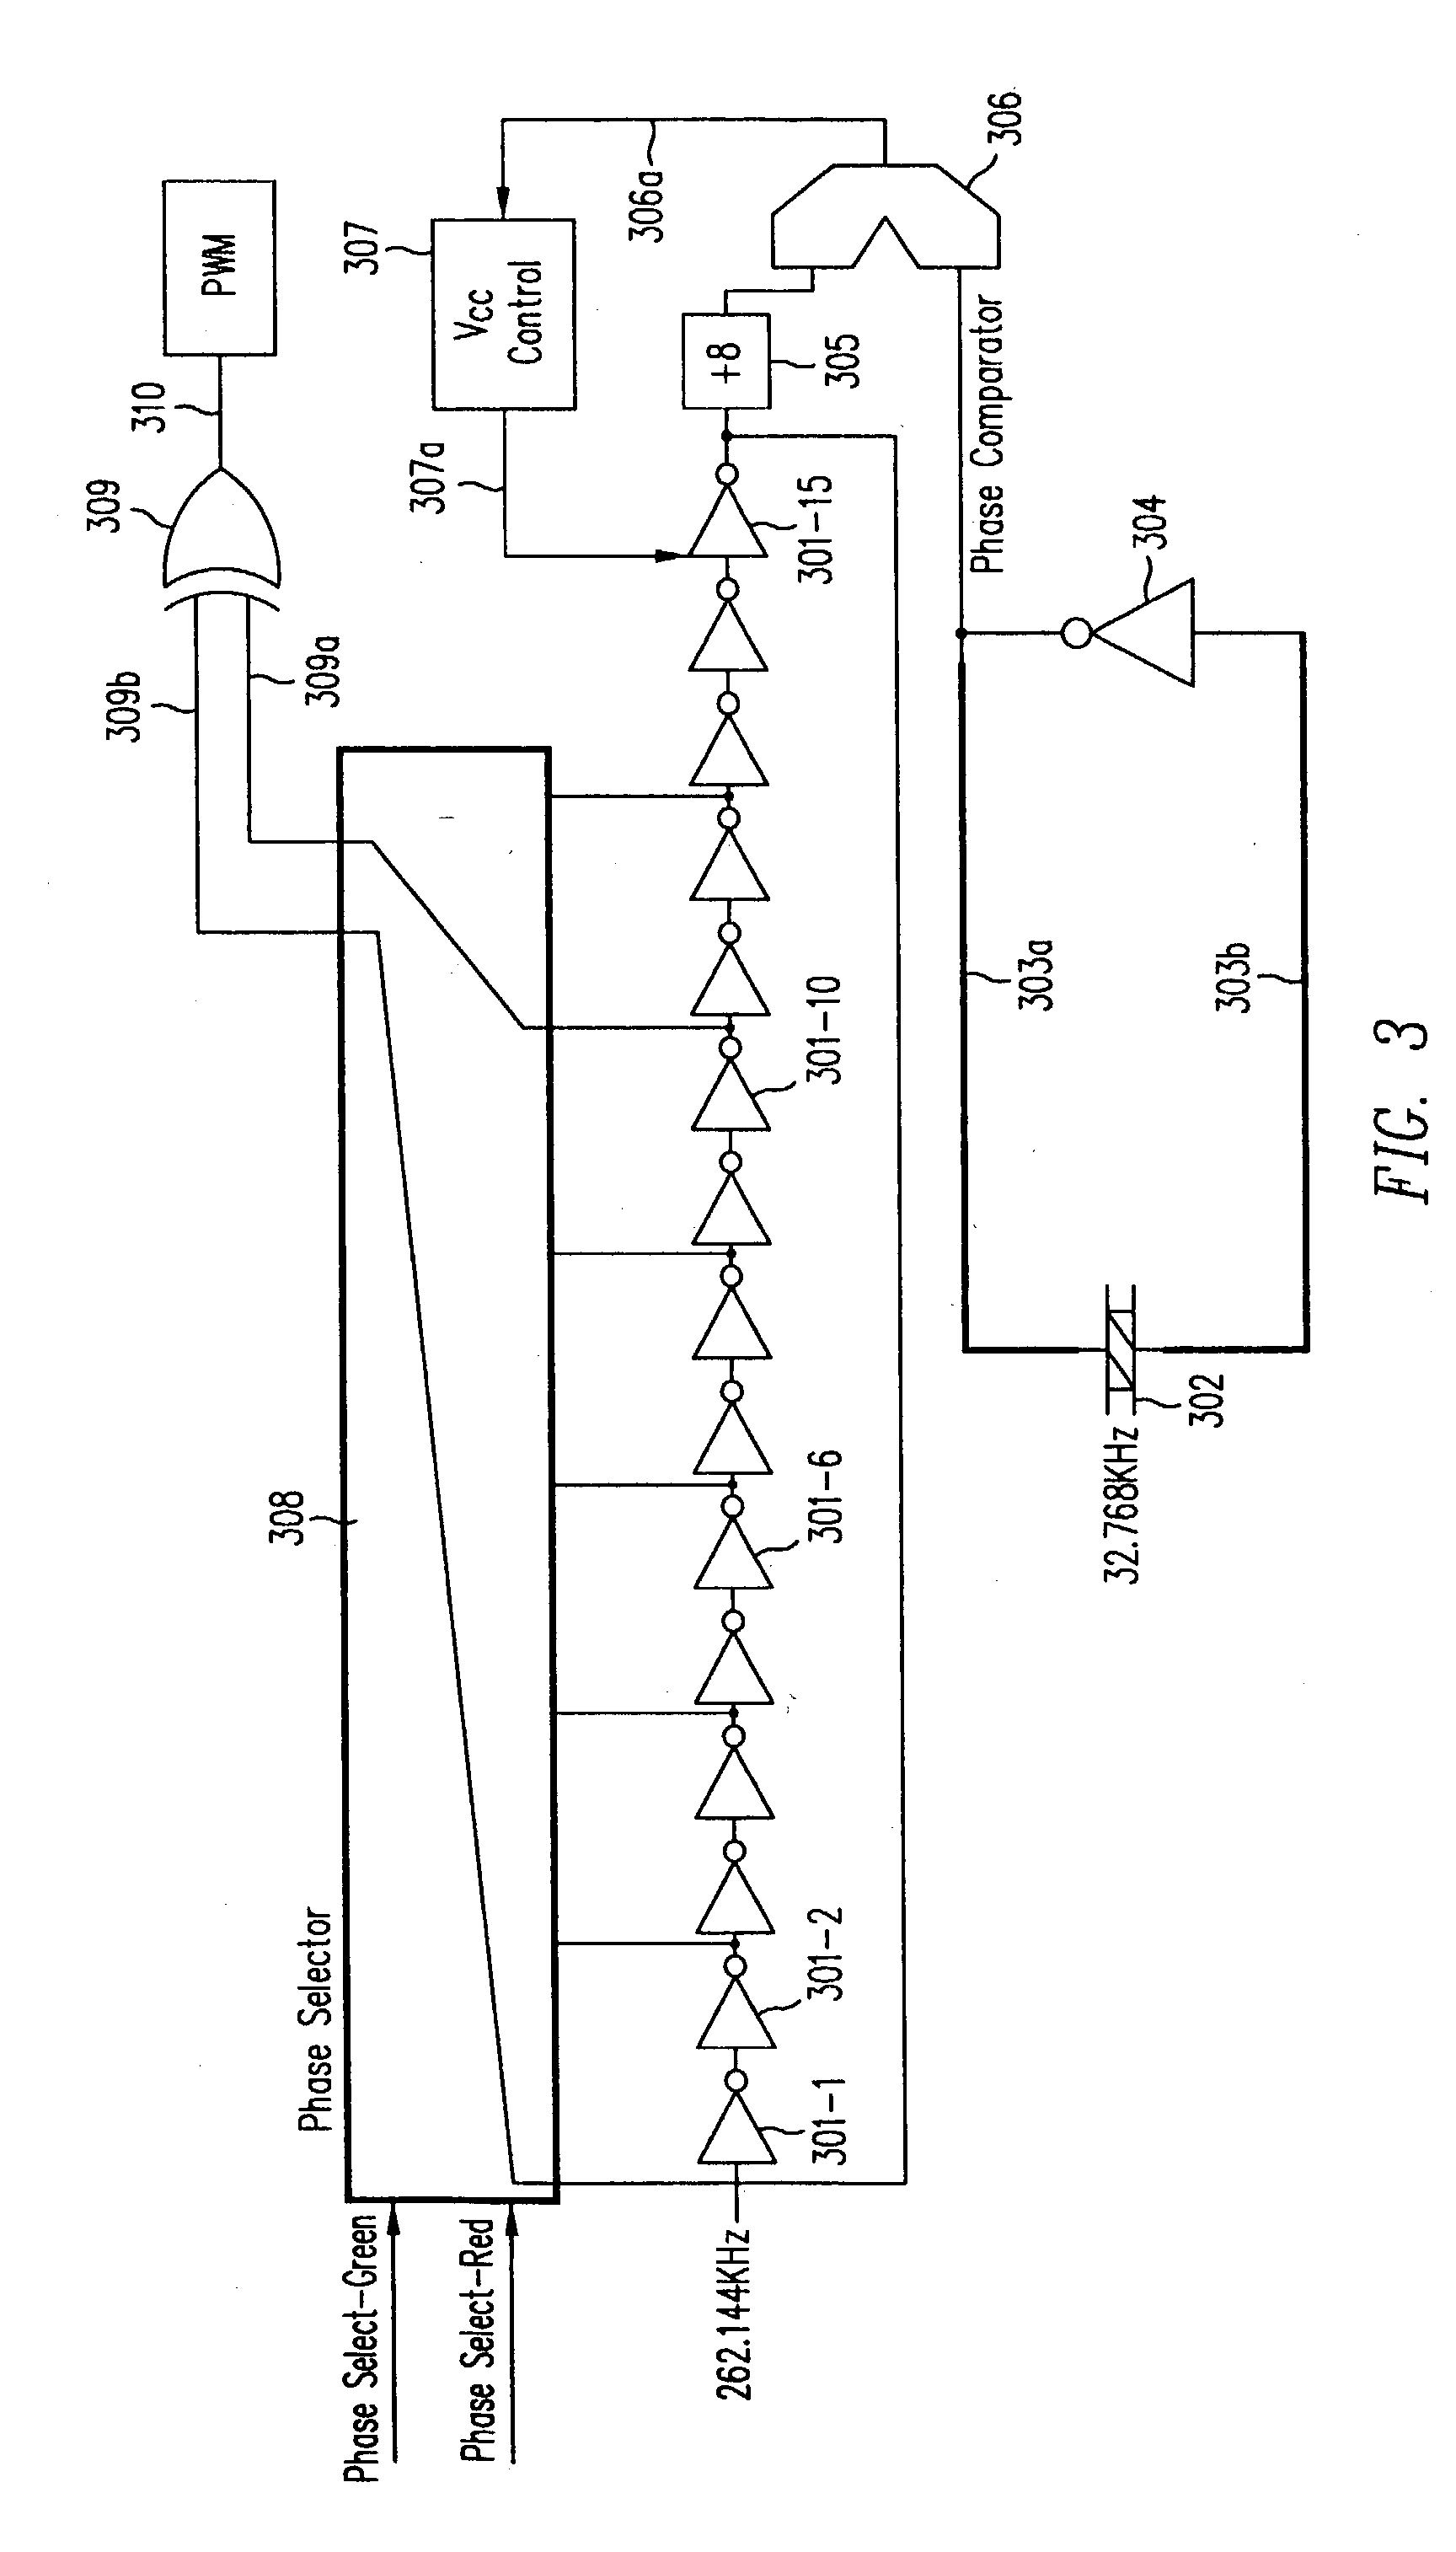 Power converter circuitry and method